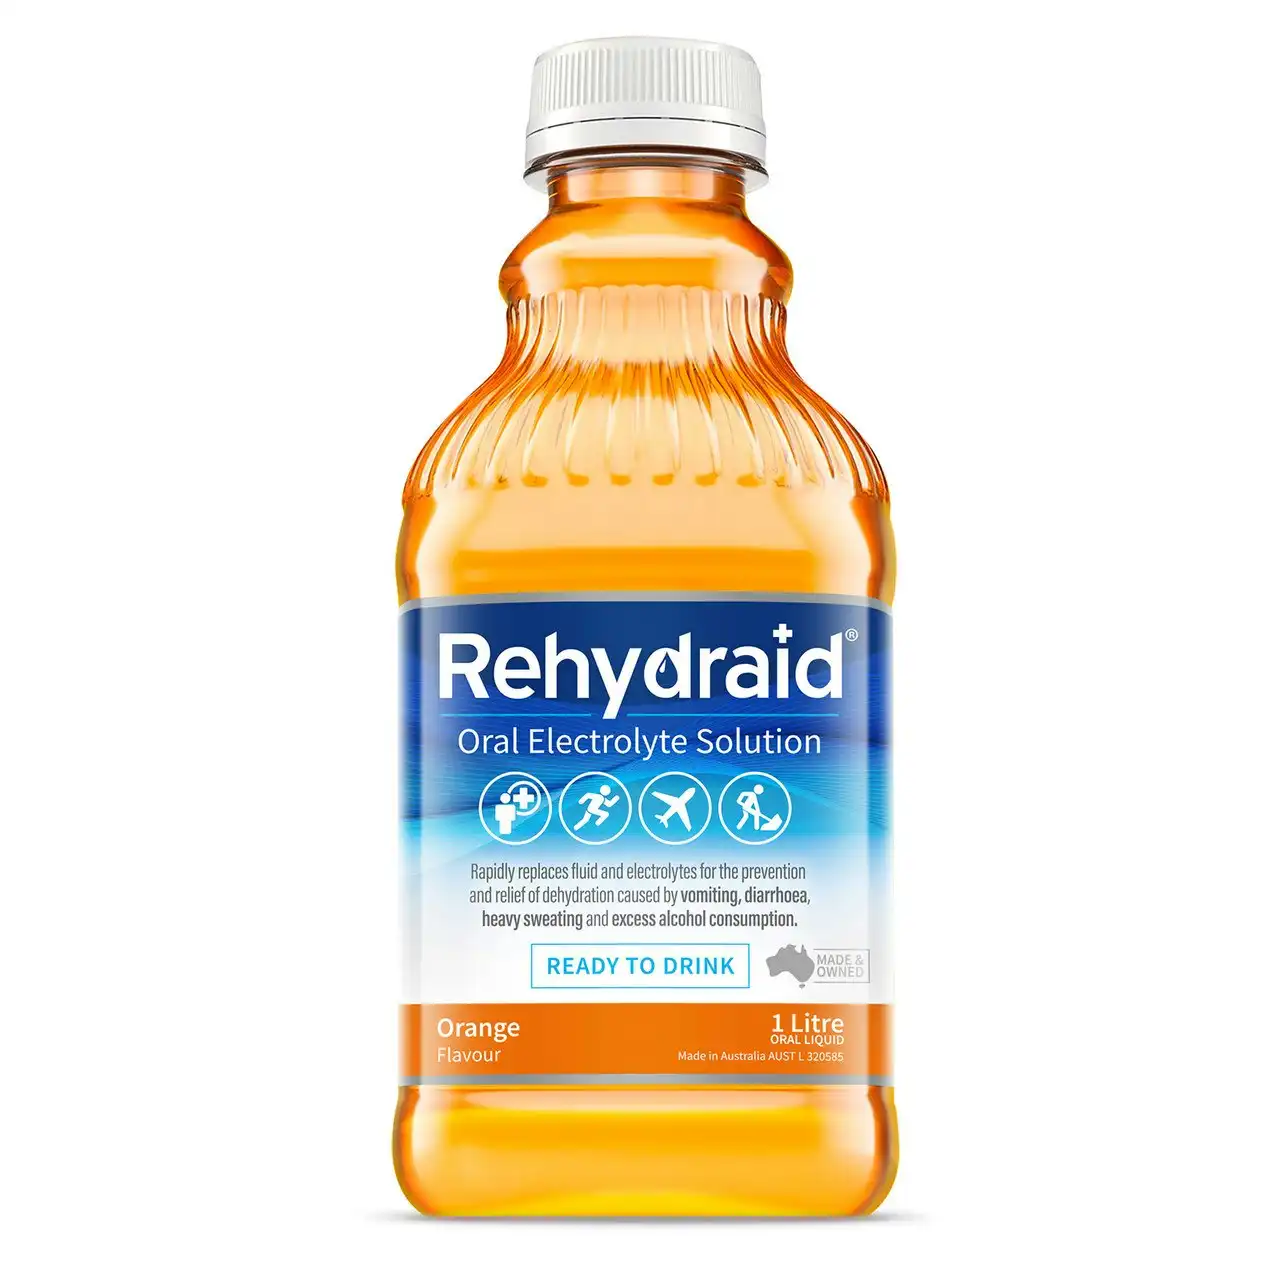 Rehydraid Oral Electrolyte Solution Orange Flavour 1 Litre